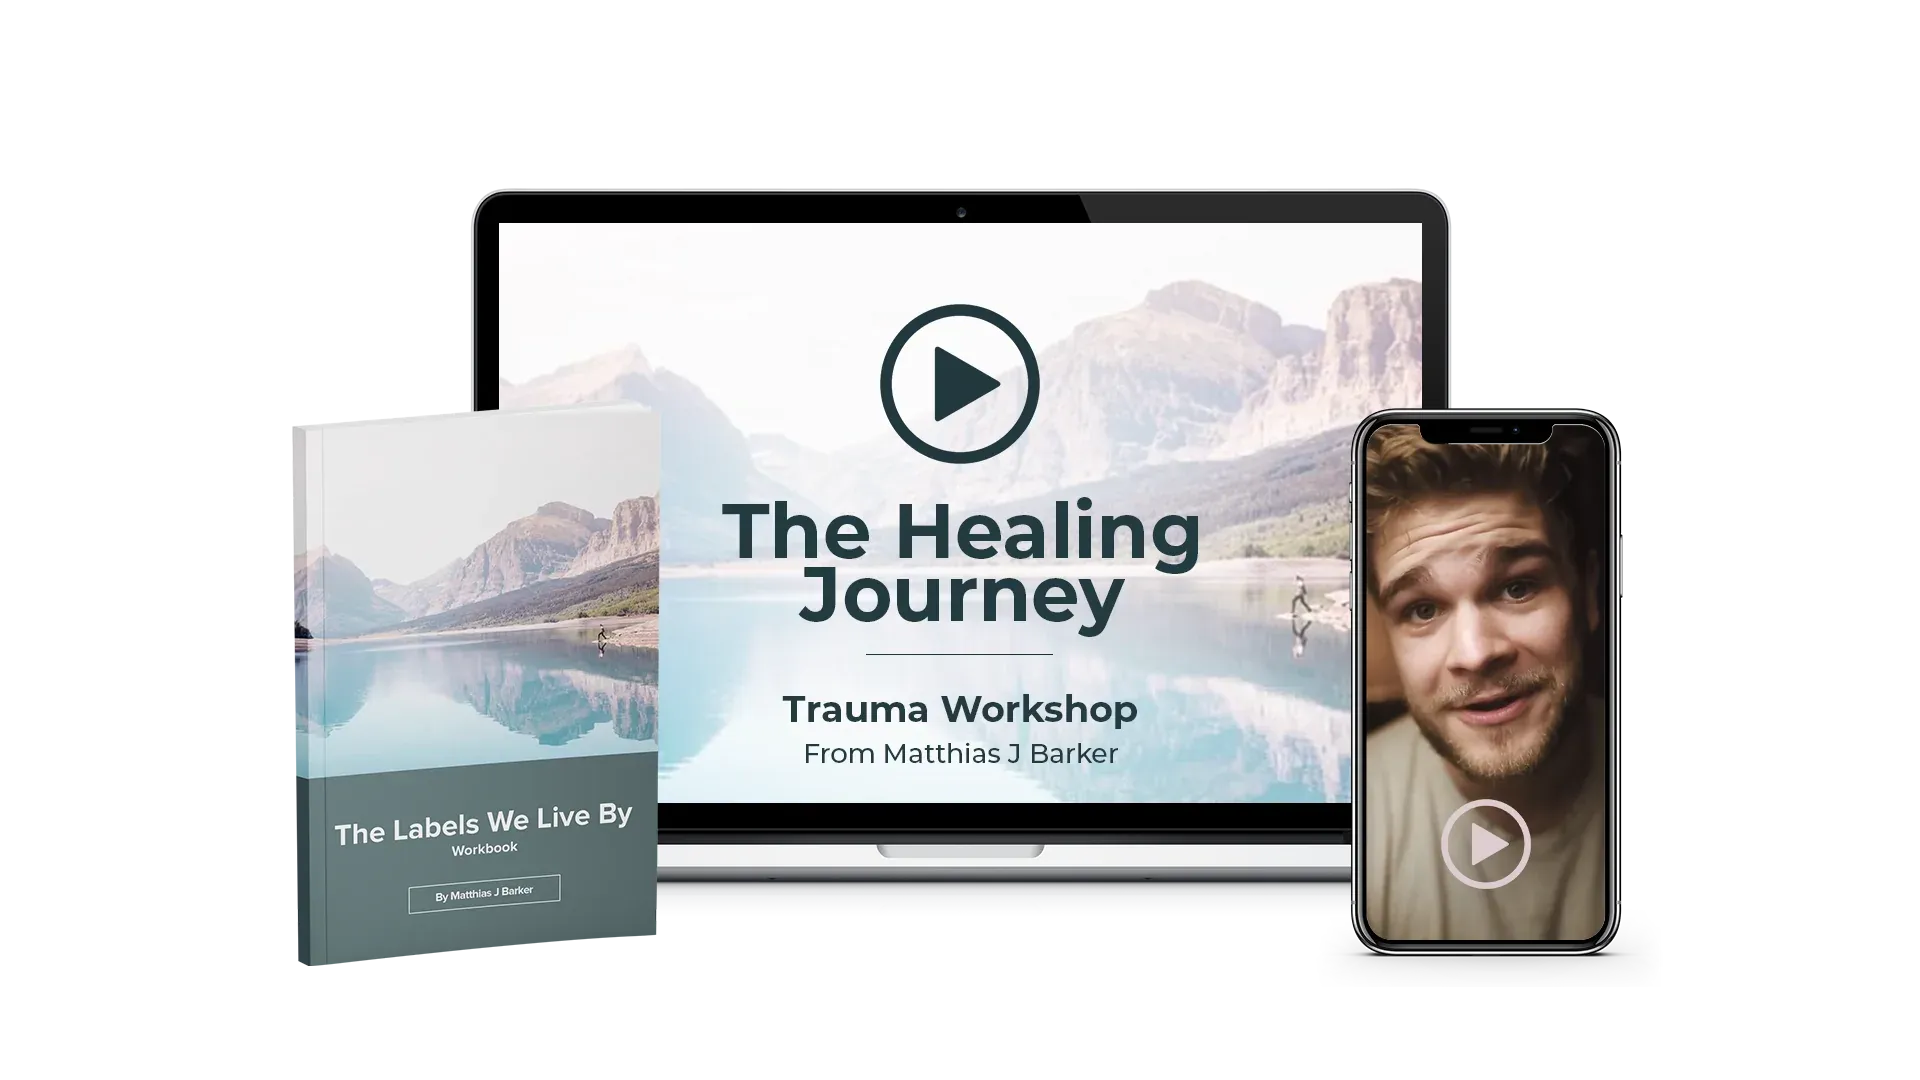 The Healing Journey Workshop